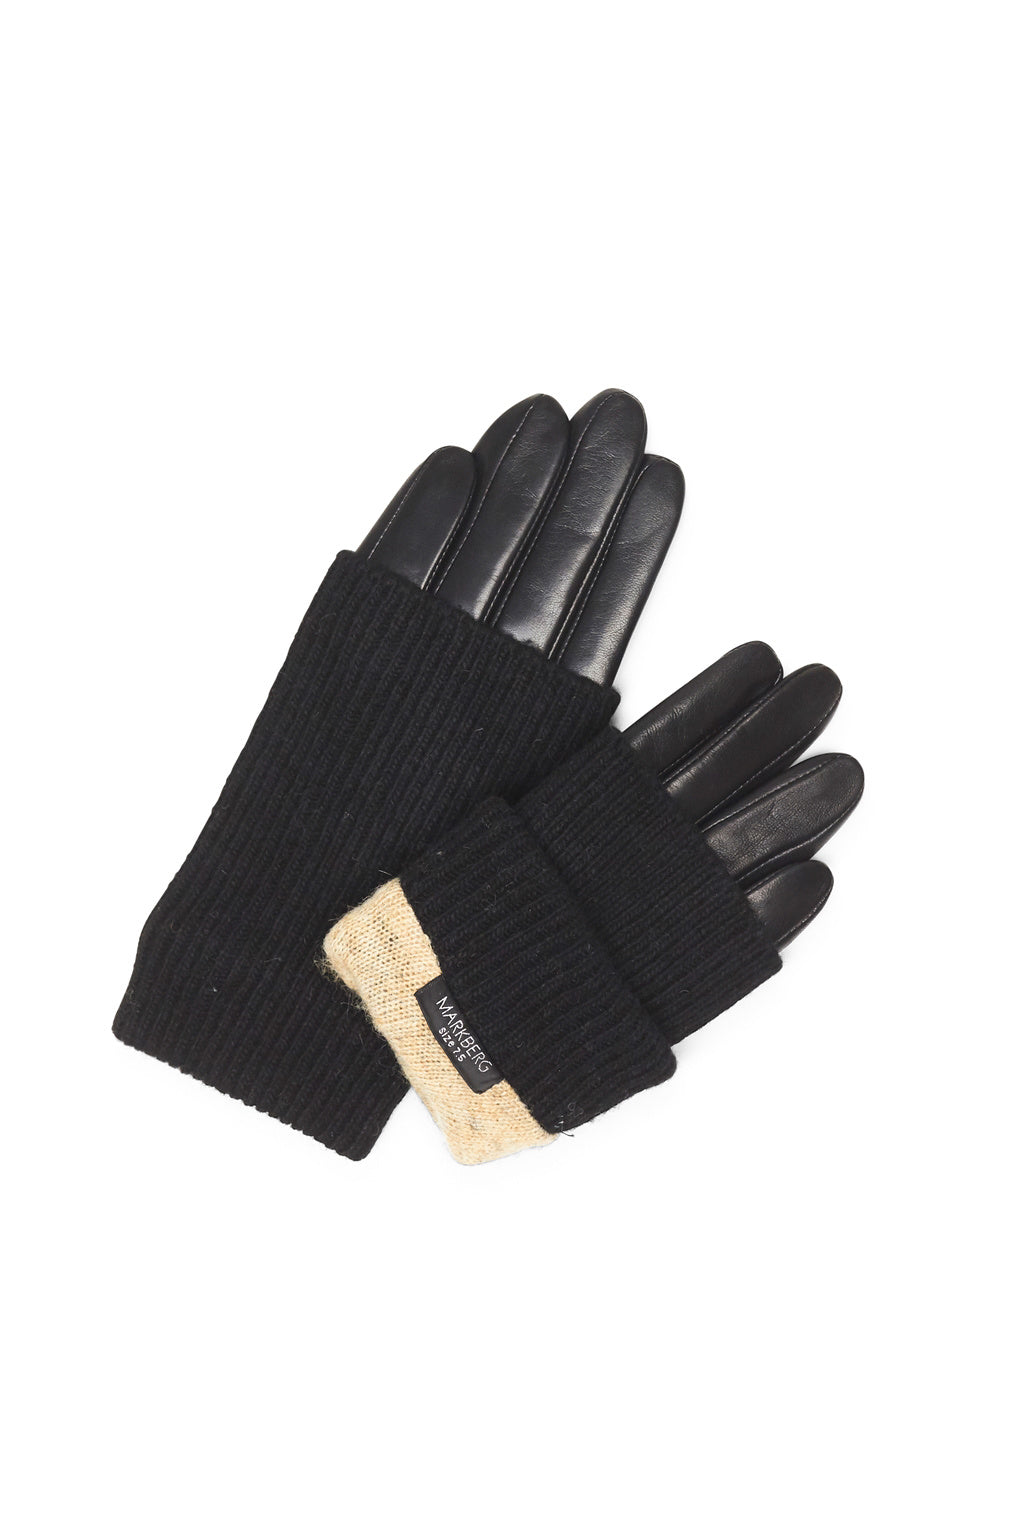 Helly Glove - Black